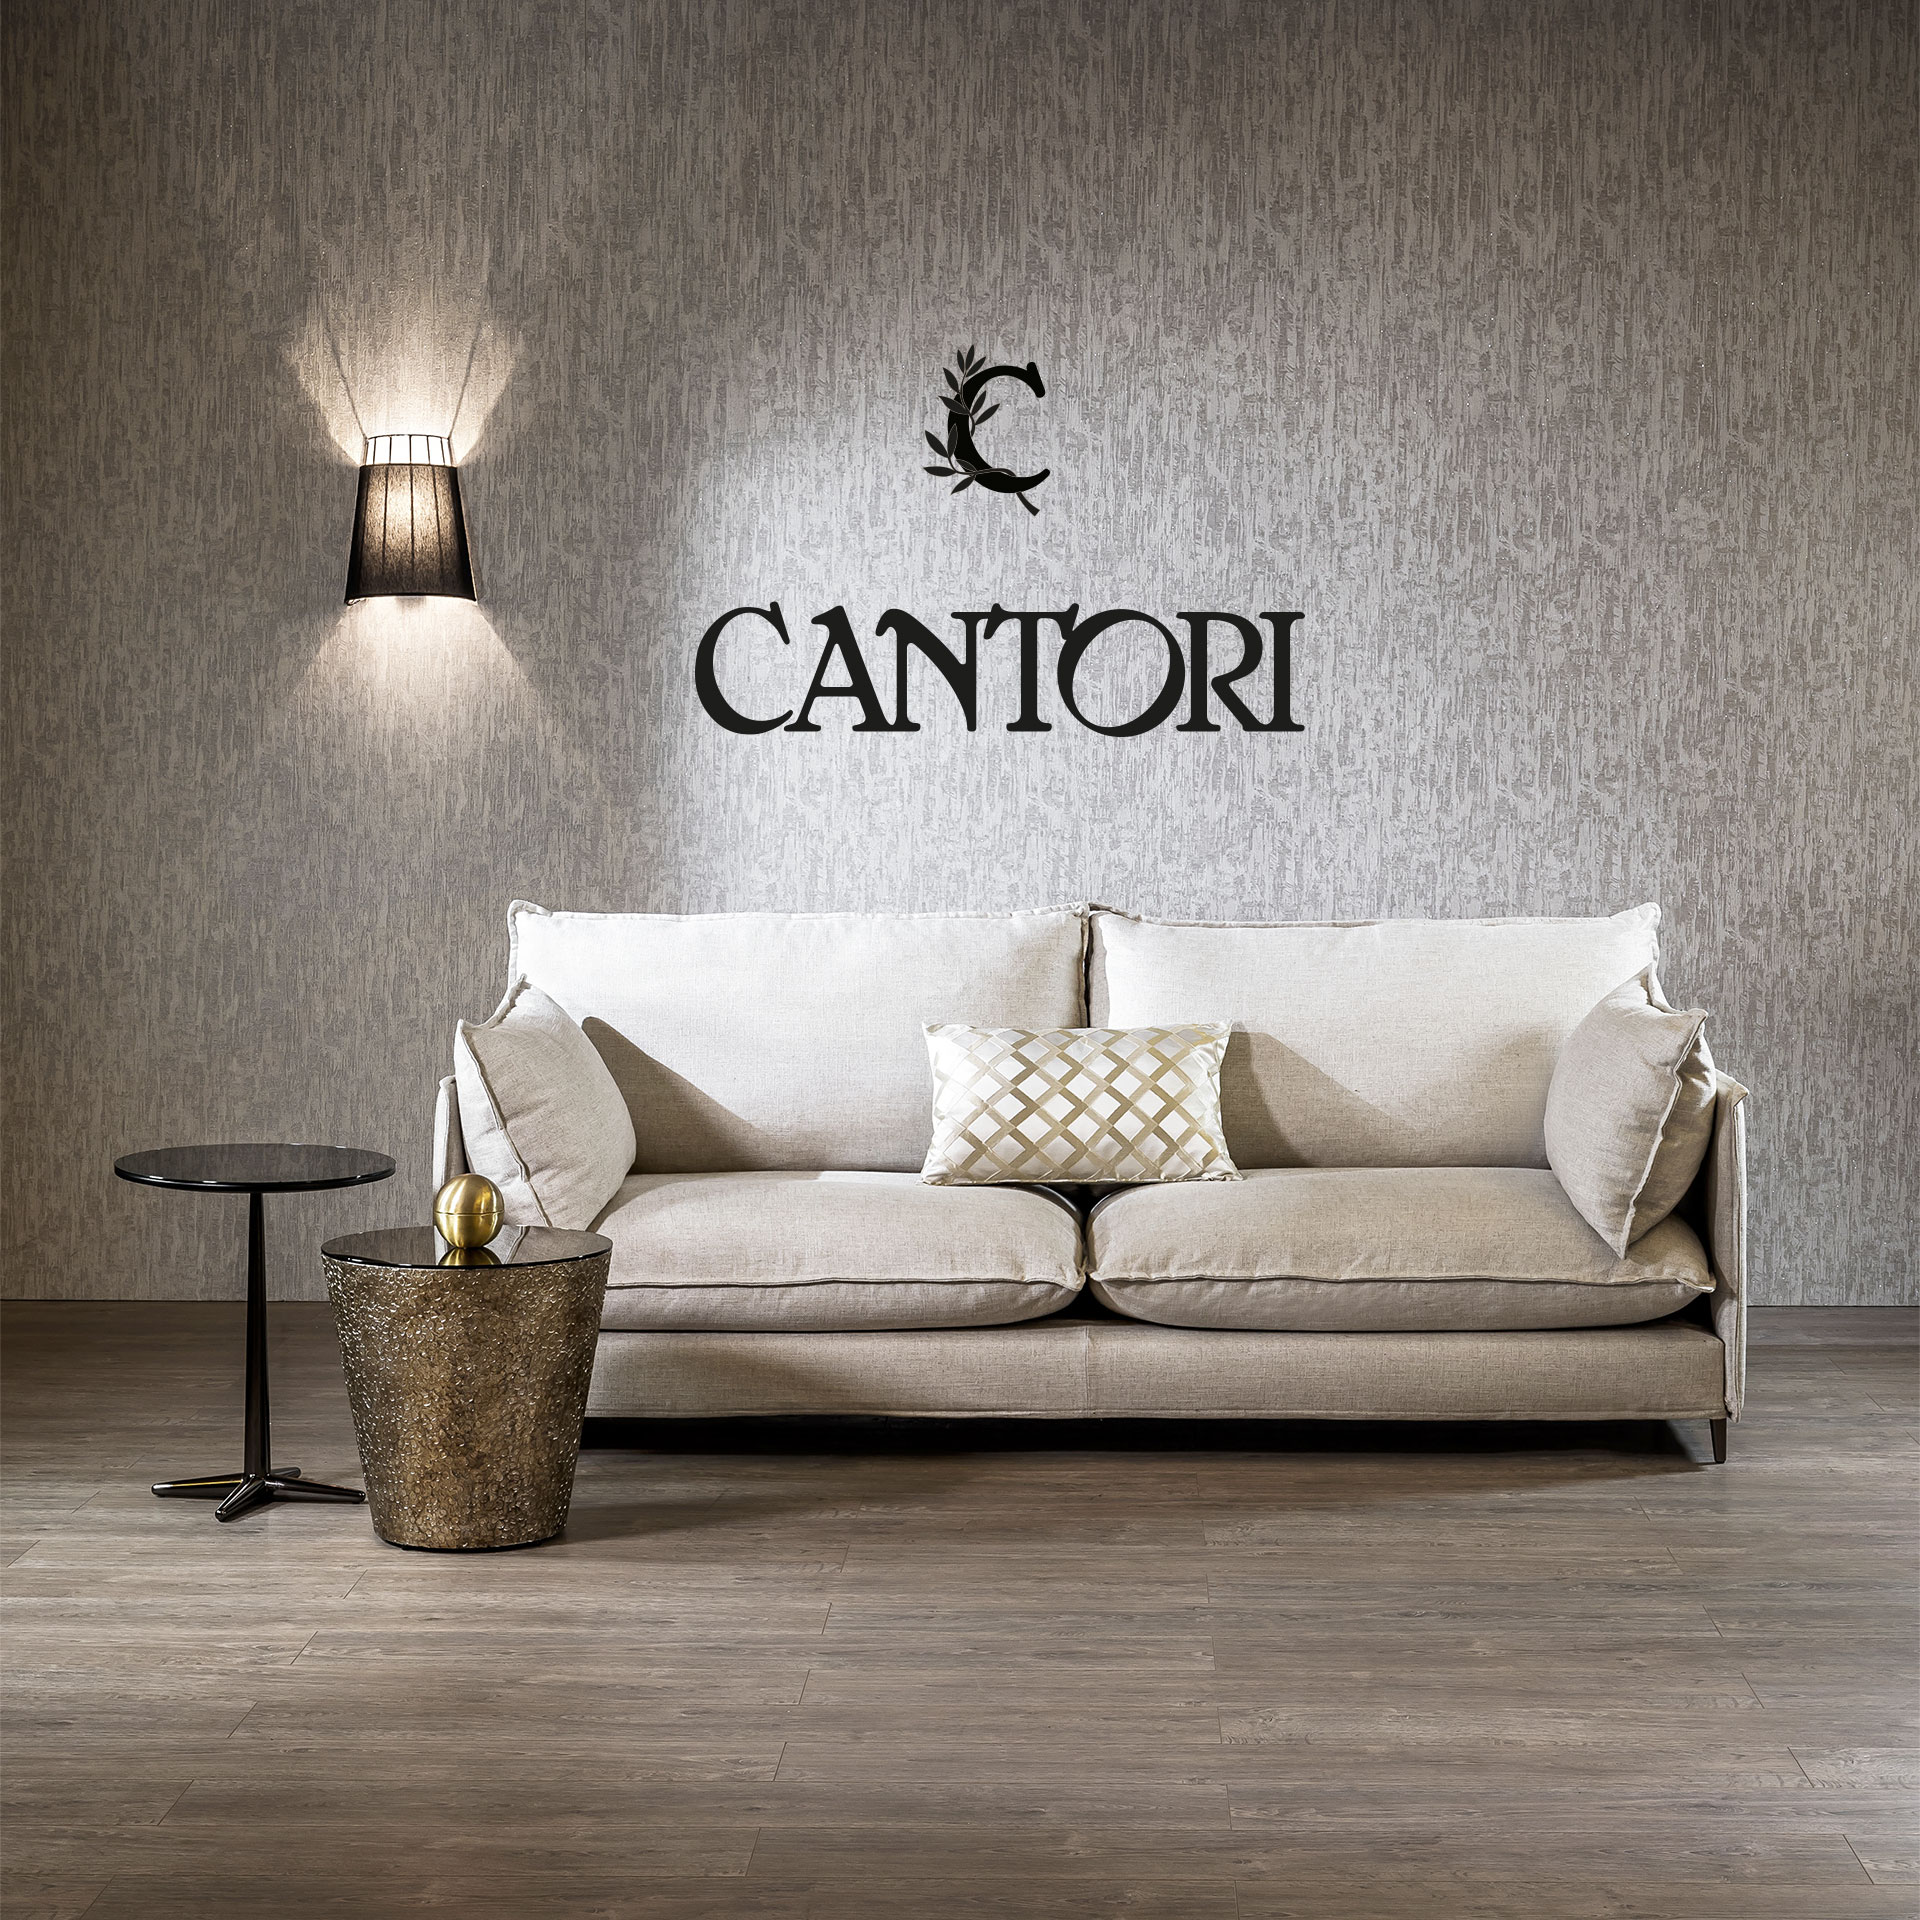 21/09/2017 Cantori a I Saloni WorldWide 2017 - Cantori